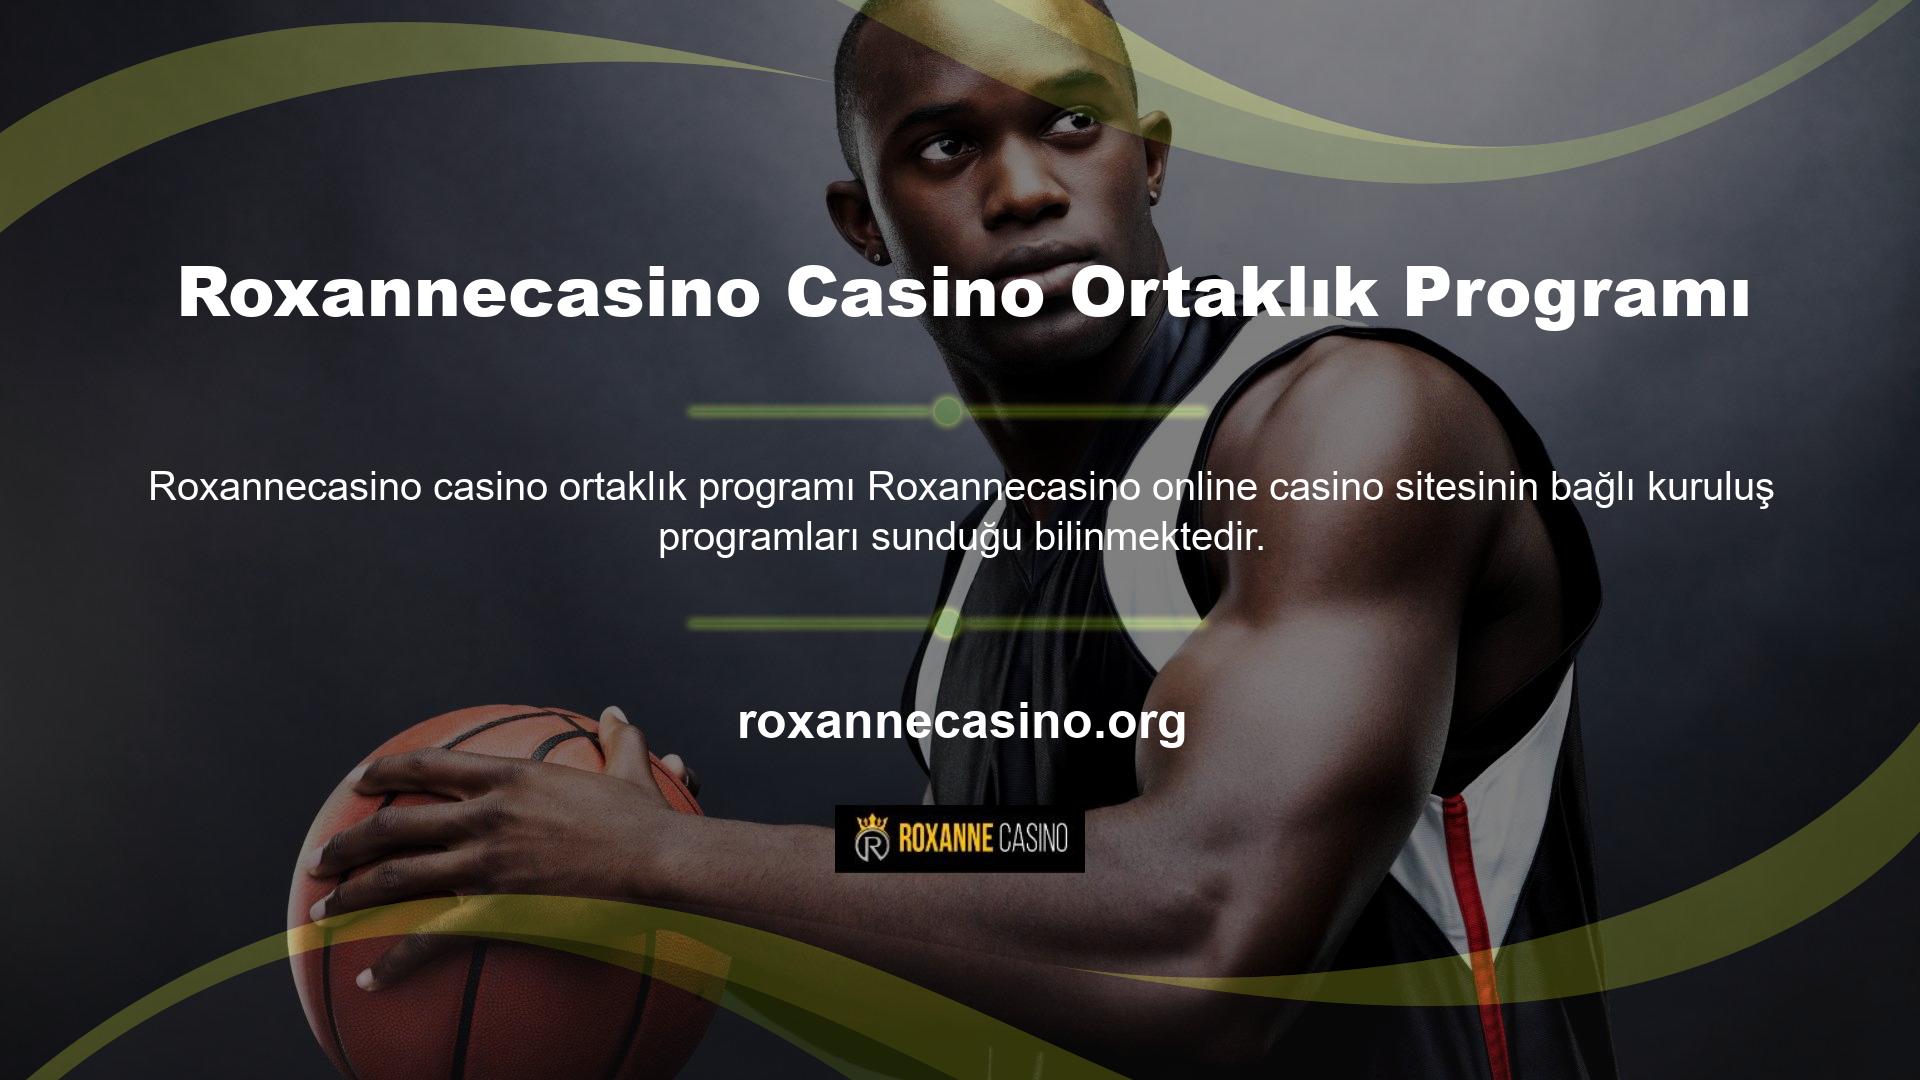 Roxannecasino online casino Twitter güveni